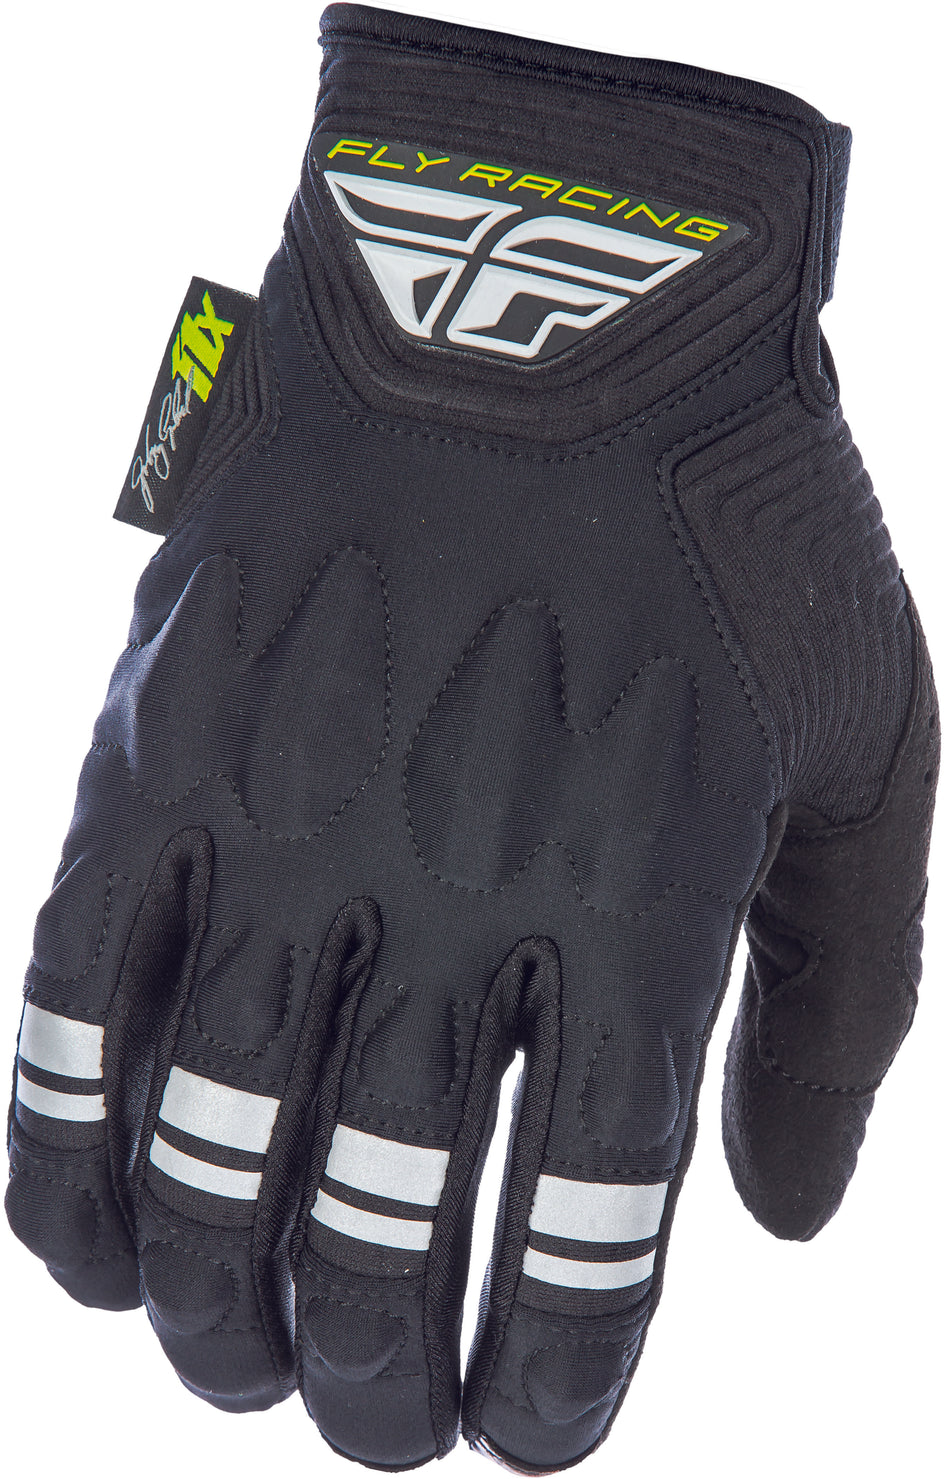 FLY RACING Johnny Campbell Sig Patrol Xc Lite Gloves Black/Grey 370-68009